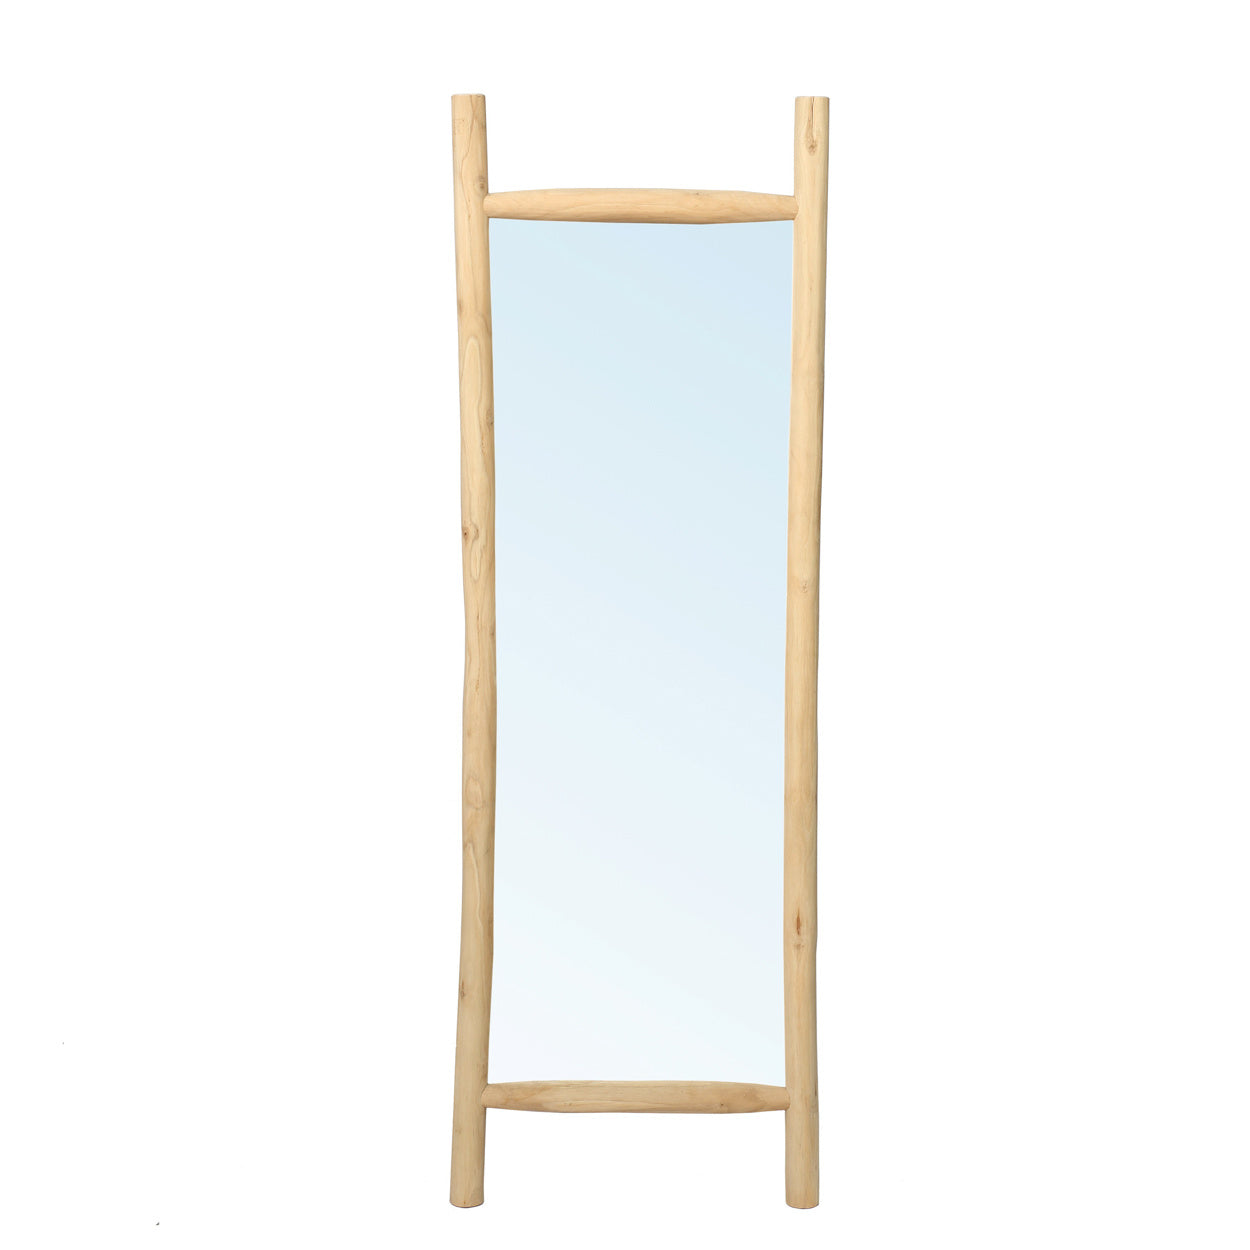 Spiegel aus Teakholz - The Island Dressing Room Mirror - Paul & Romi